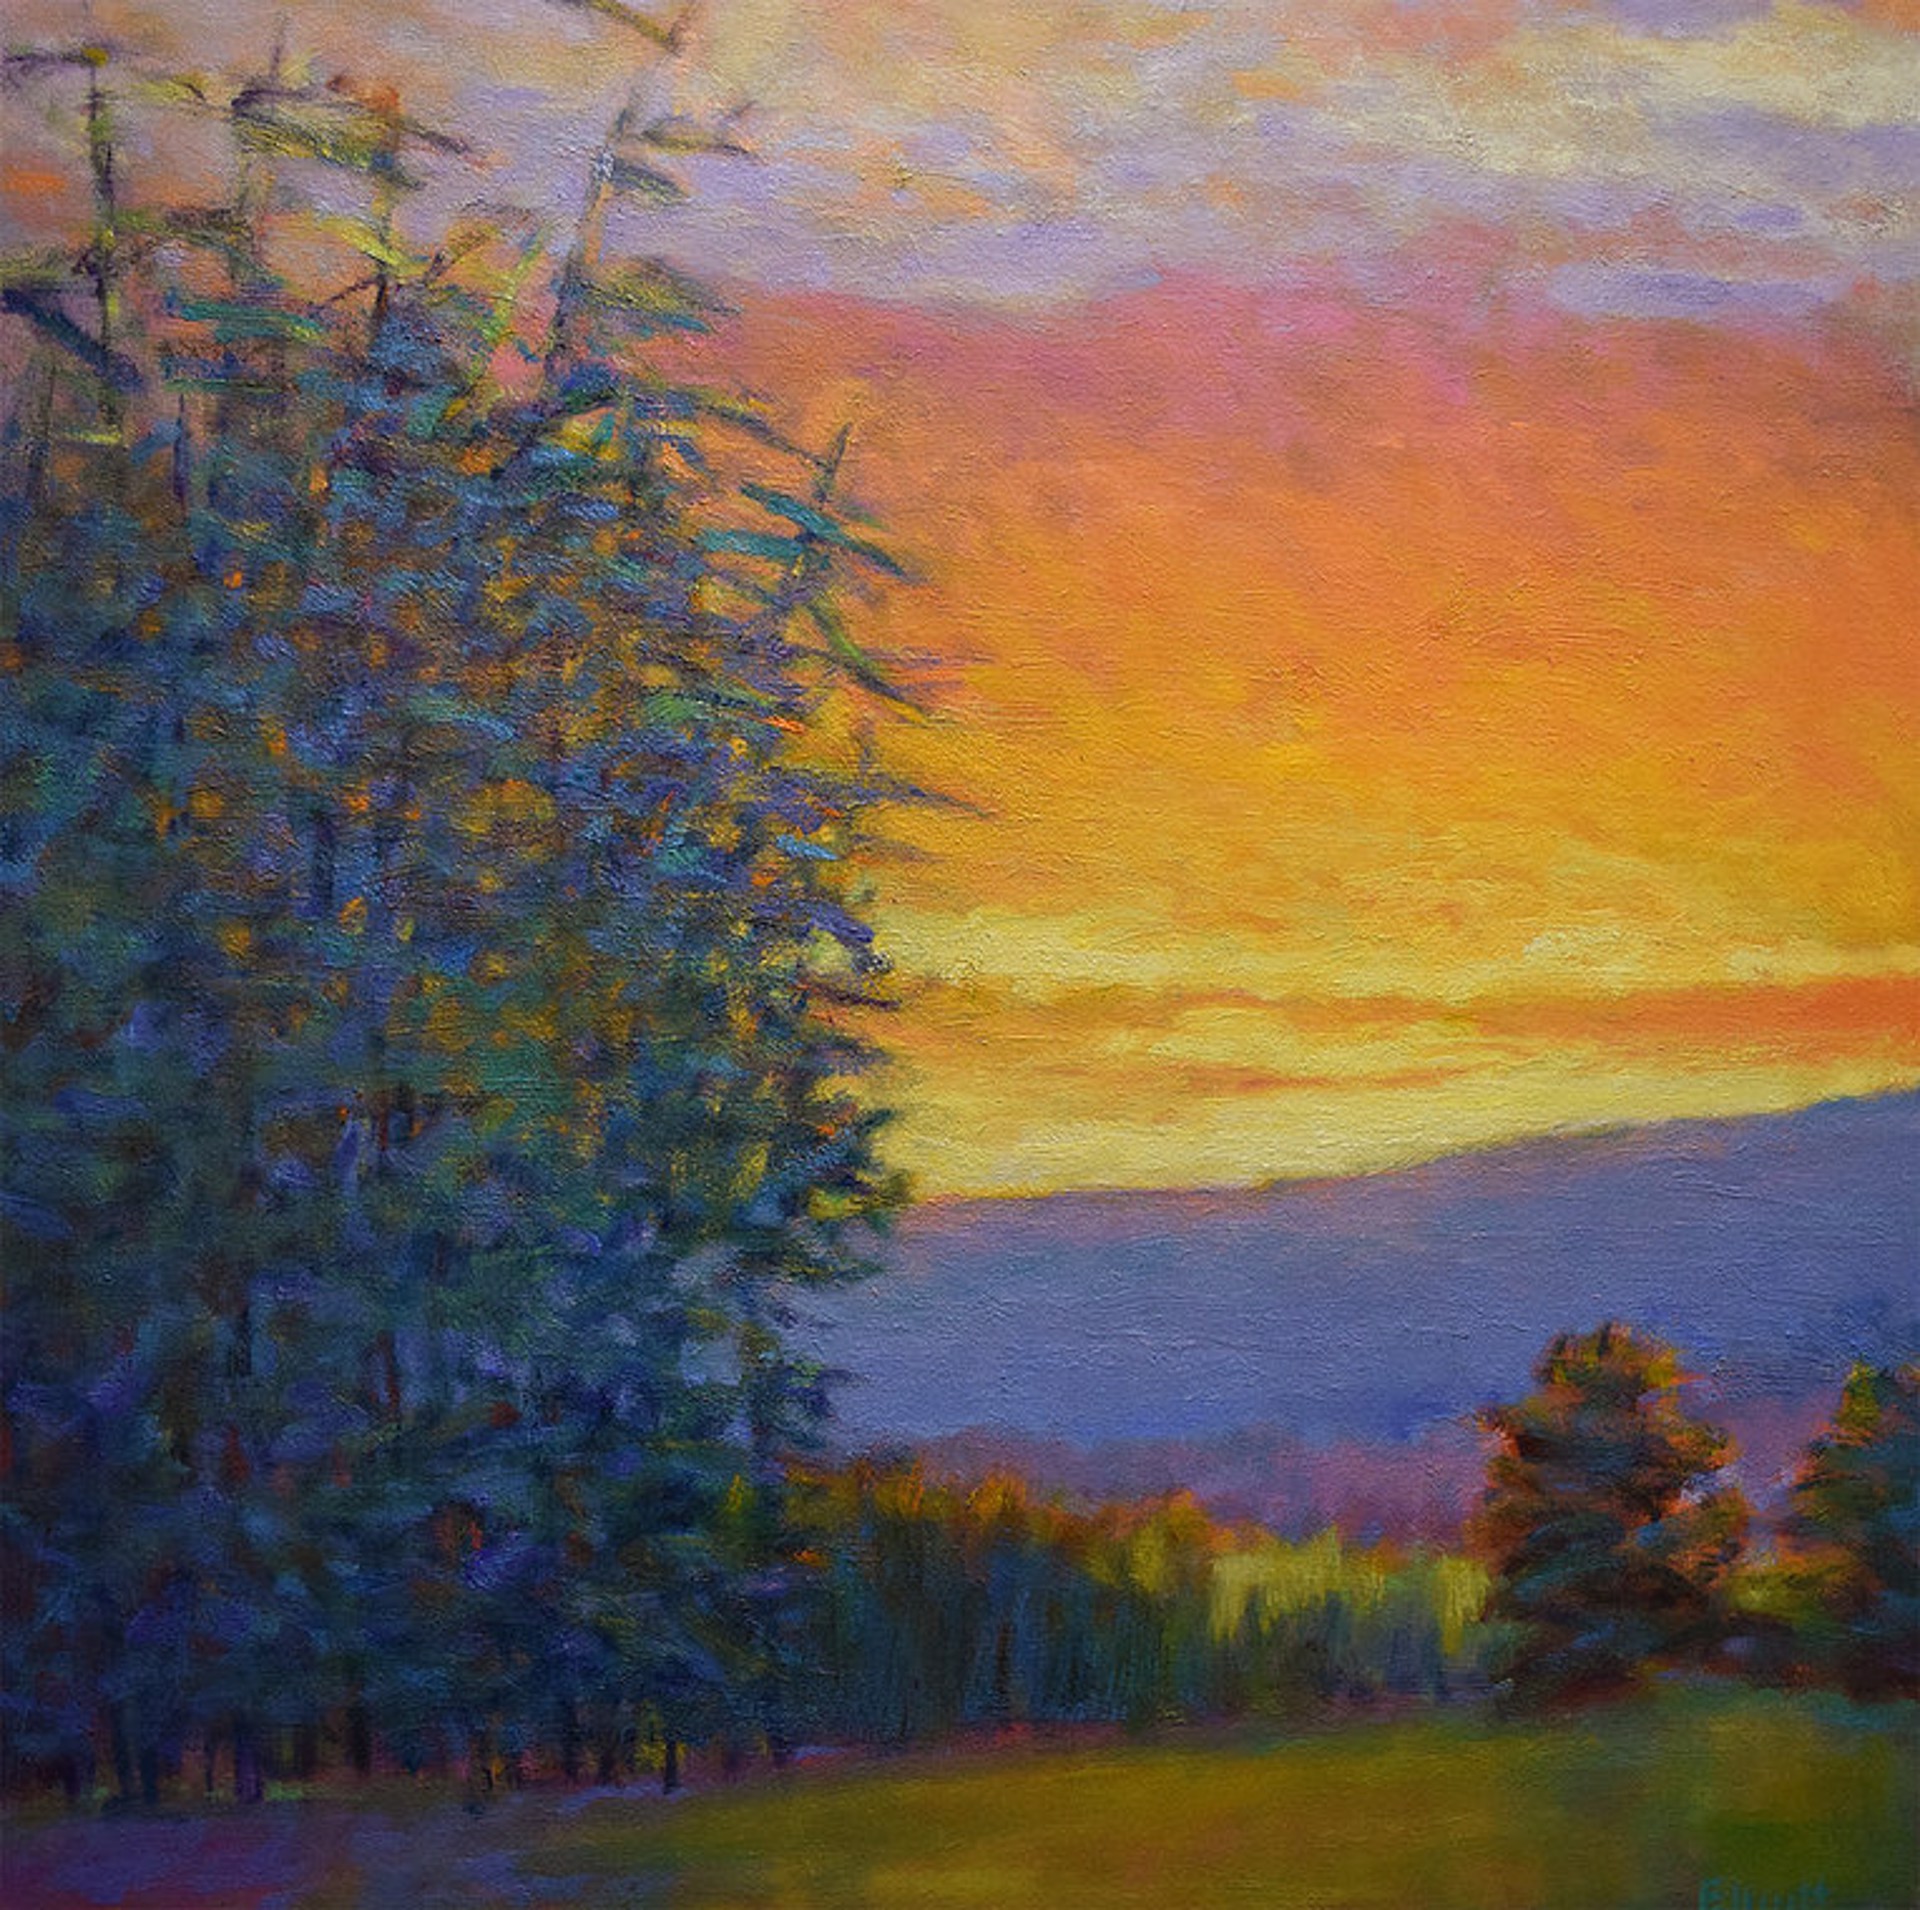 Enriched Evening, Sunset by Ken Elliott